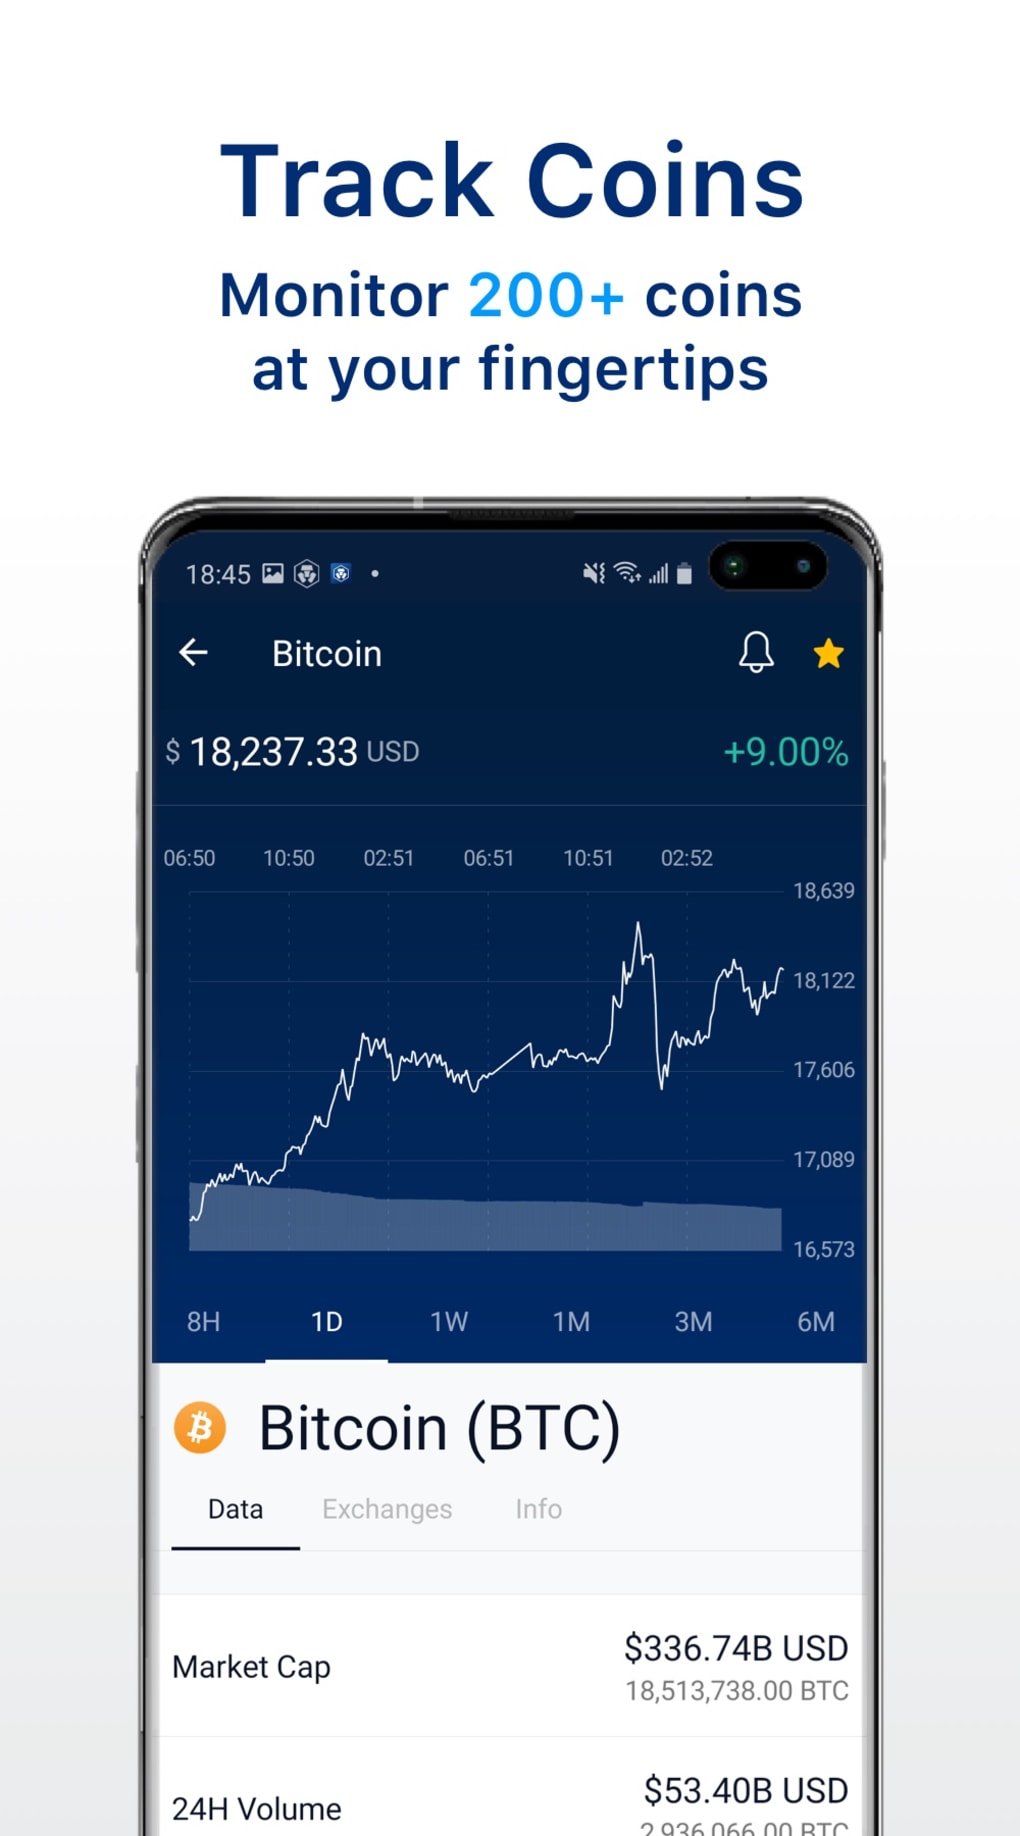 crypto.com buy bitcoin now apk